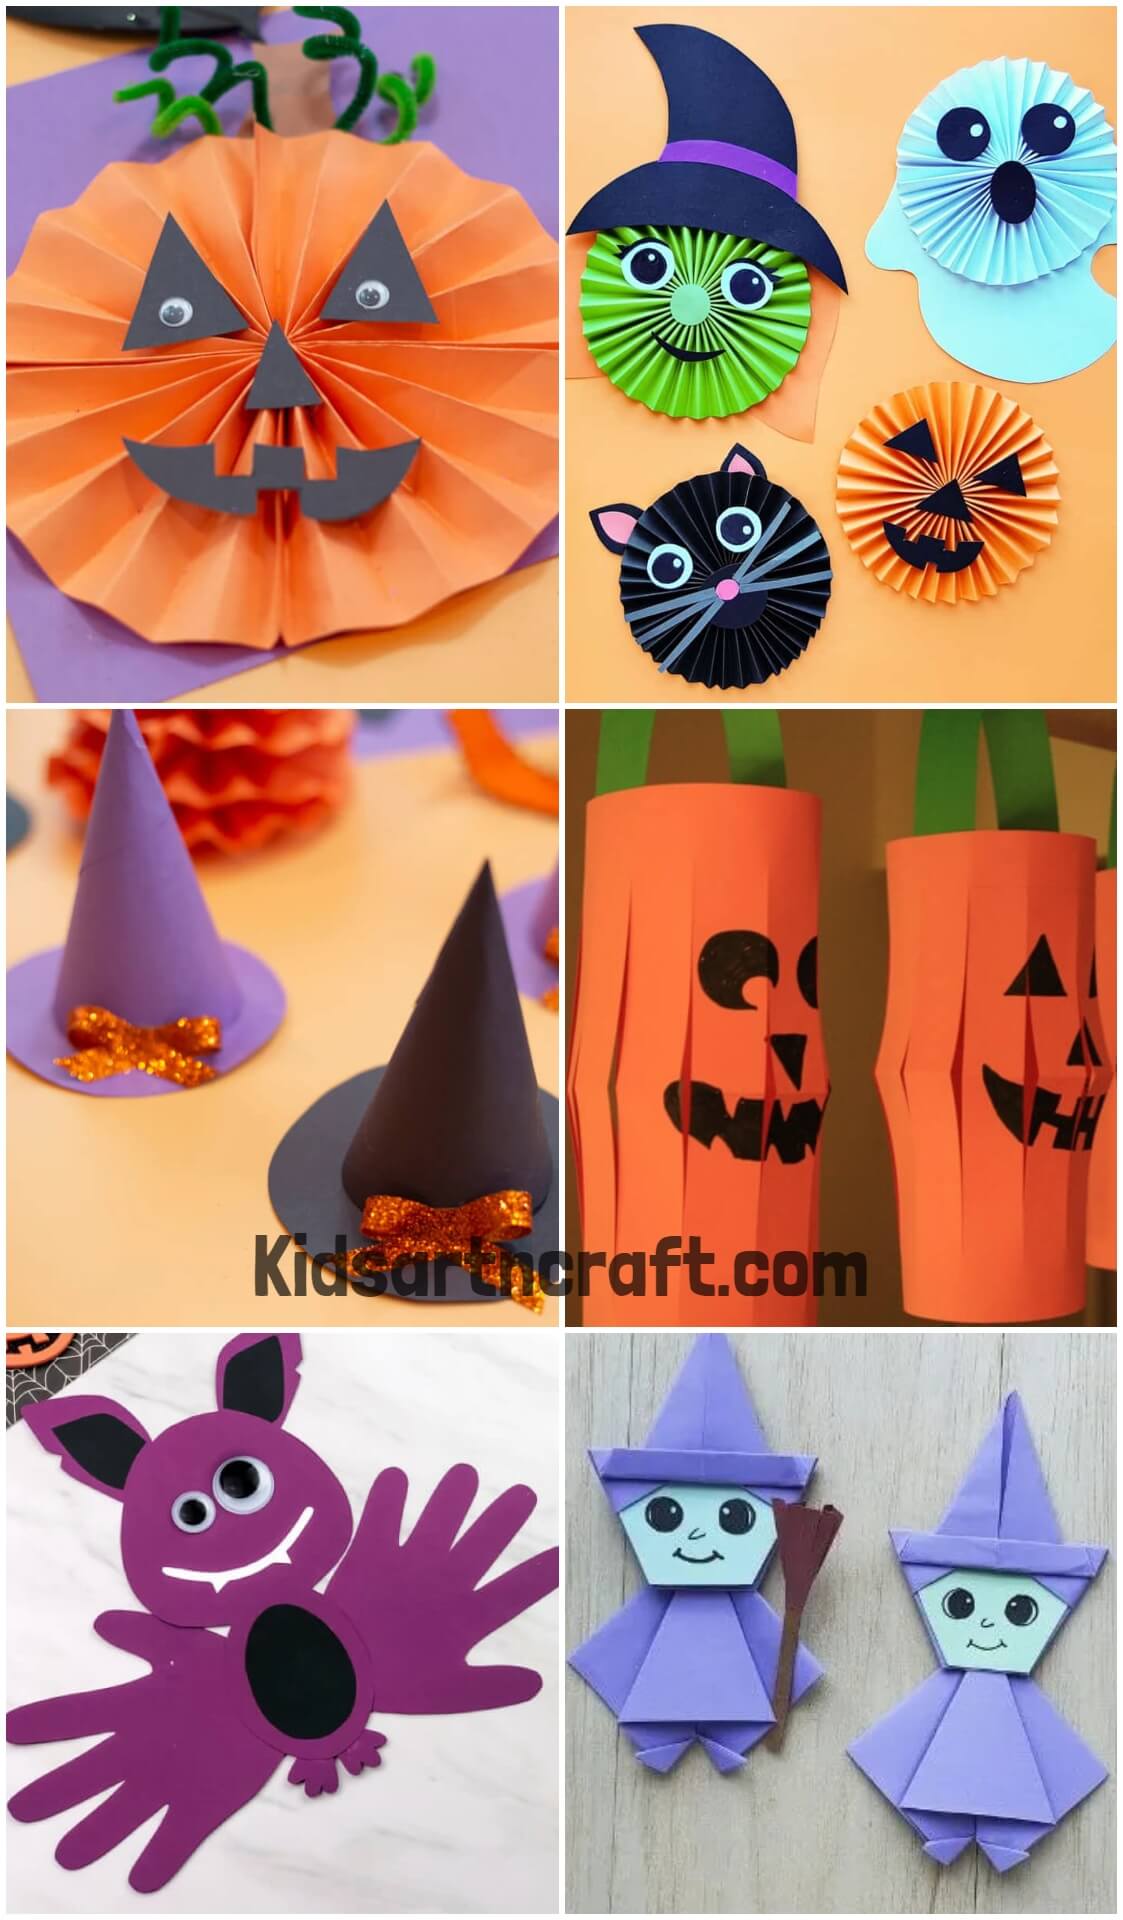 Construction Paper Crafts for Halloween - Kids Art & Craft